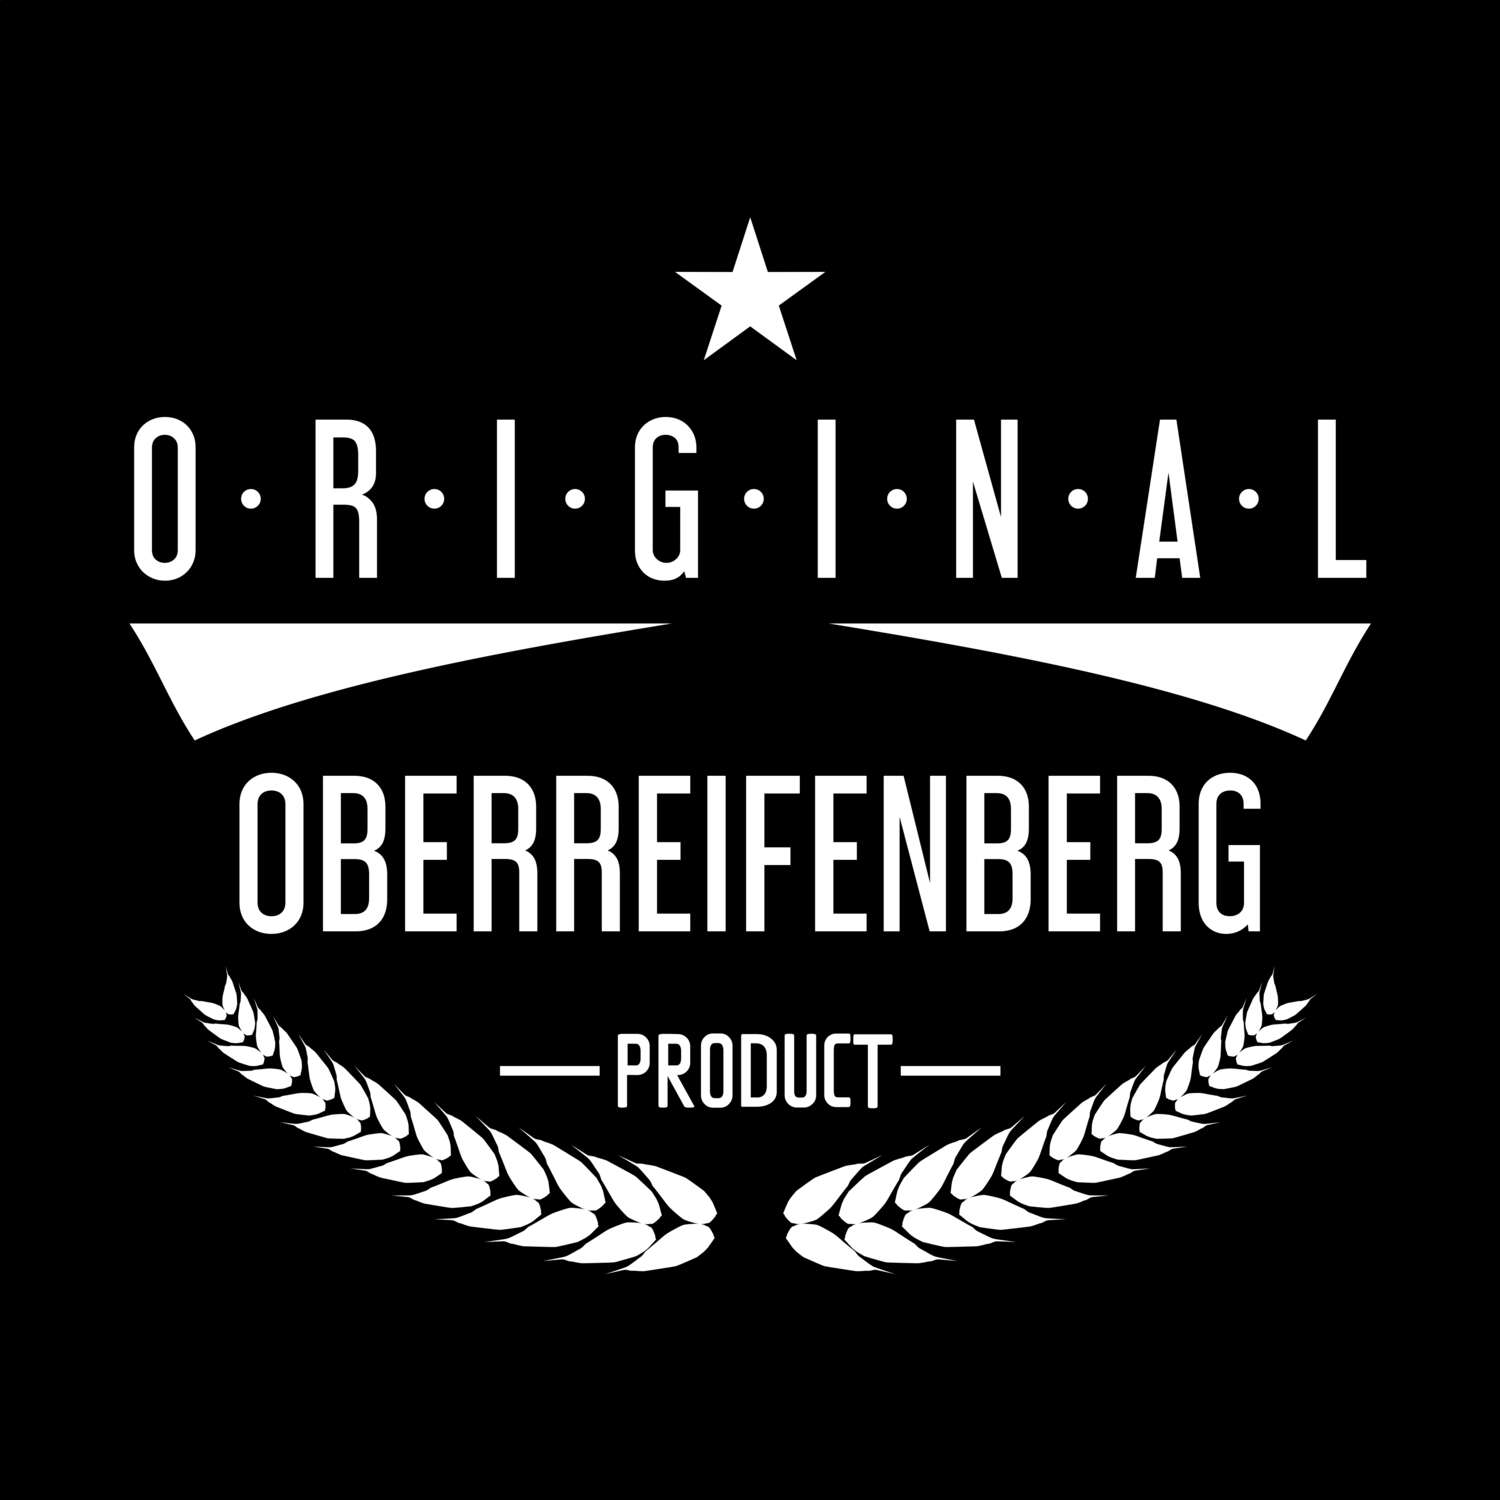 Oberreifenberg T-Shirt »Original Product«